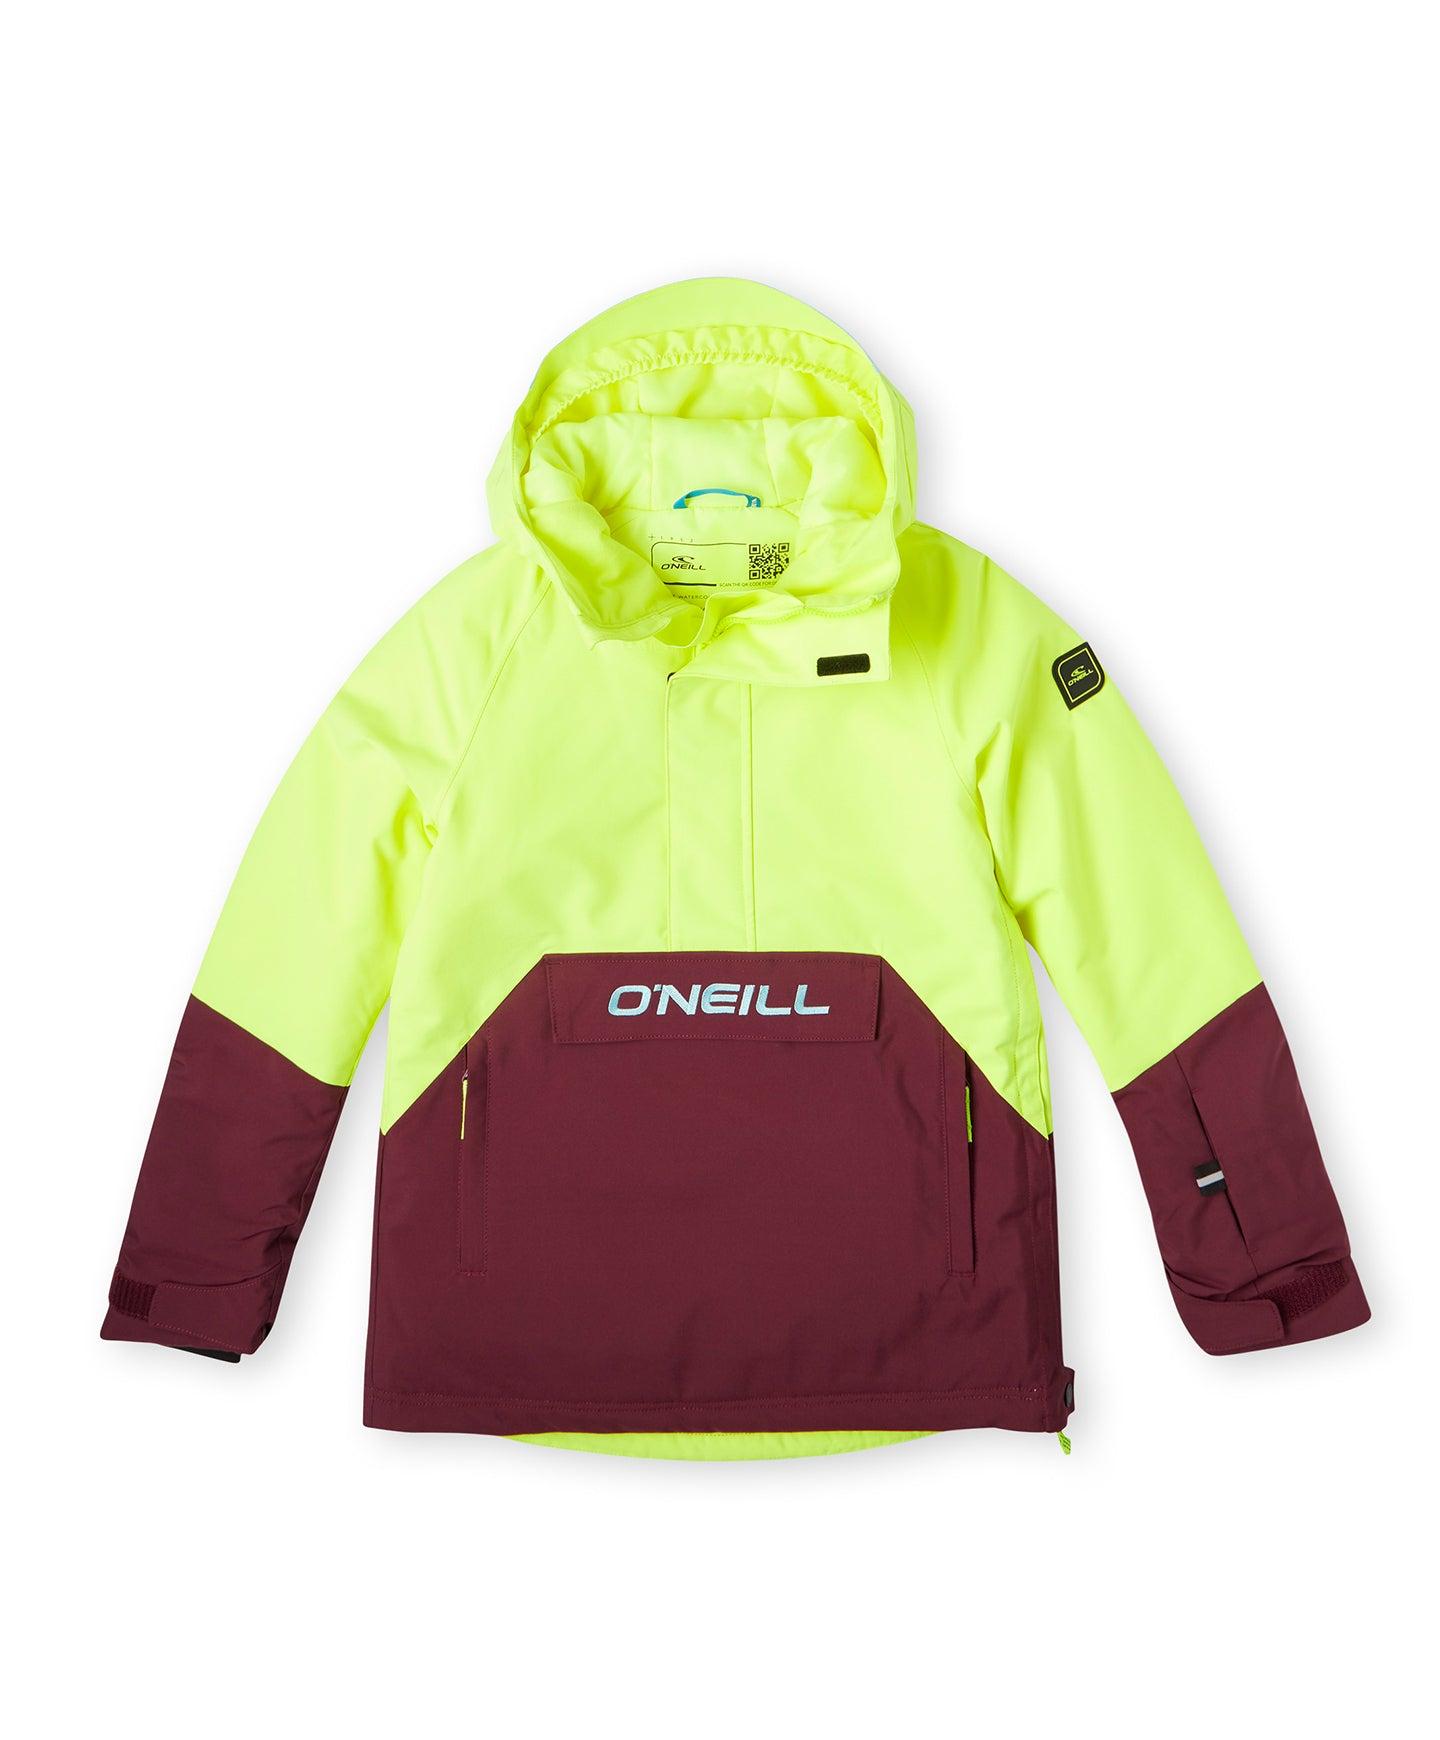 Selected image for O’NEILL Ski jakna za devojčice, Anorak, Žuta